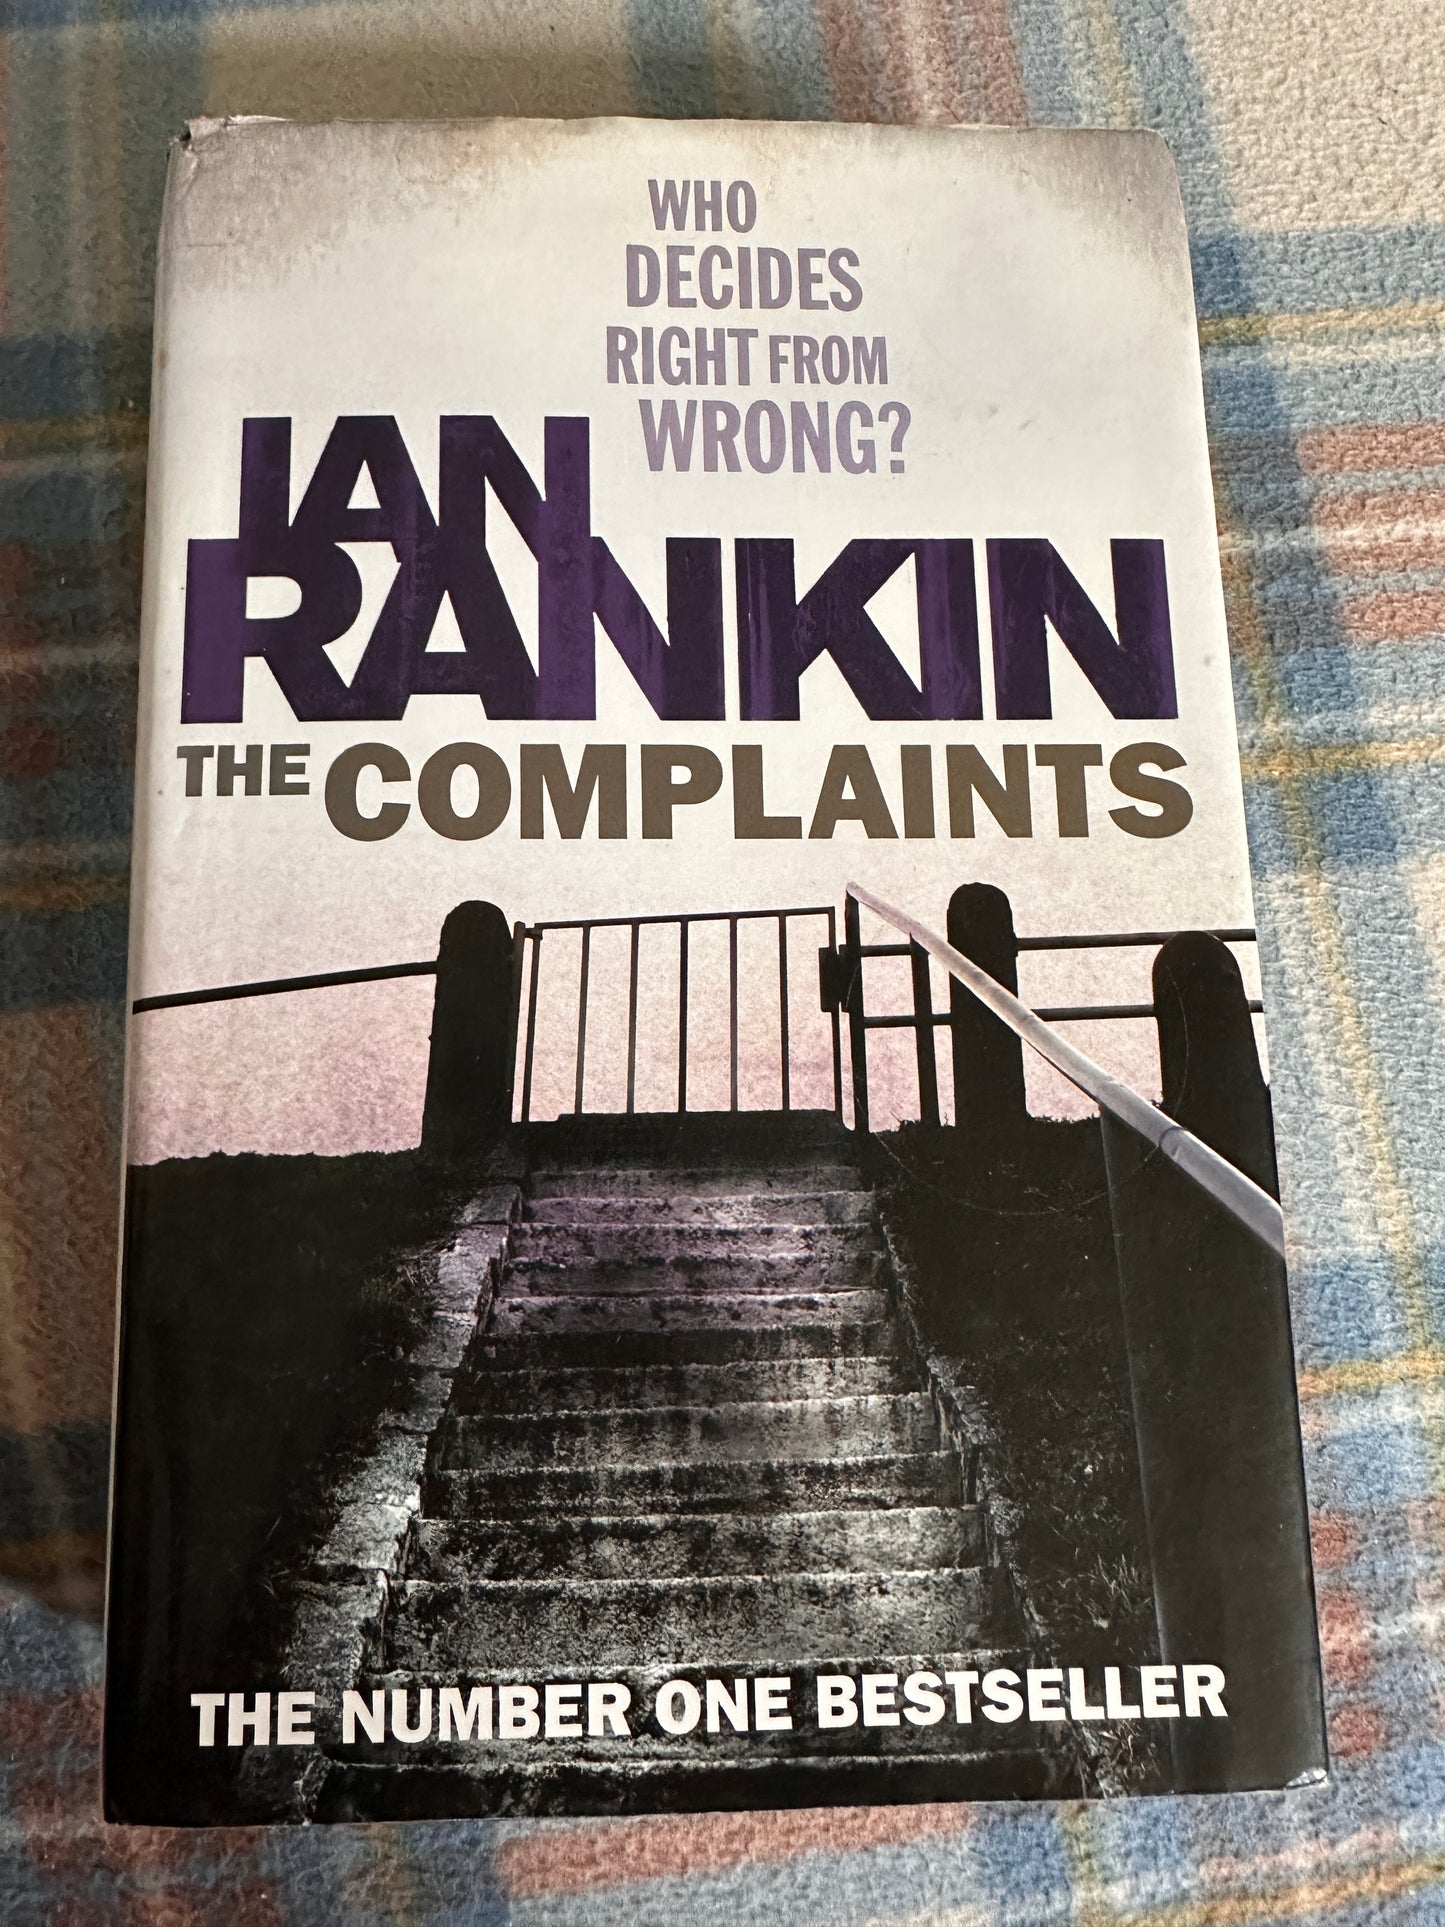 2009*1st* The Complaints - Ian Rankin(Orion)